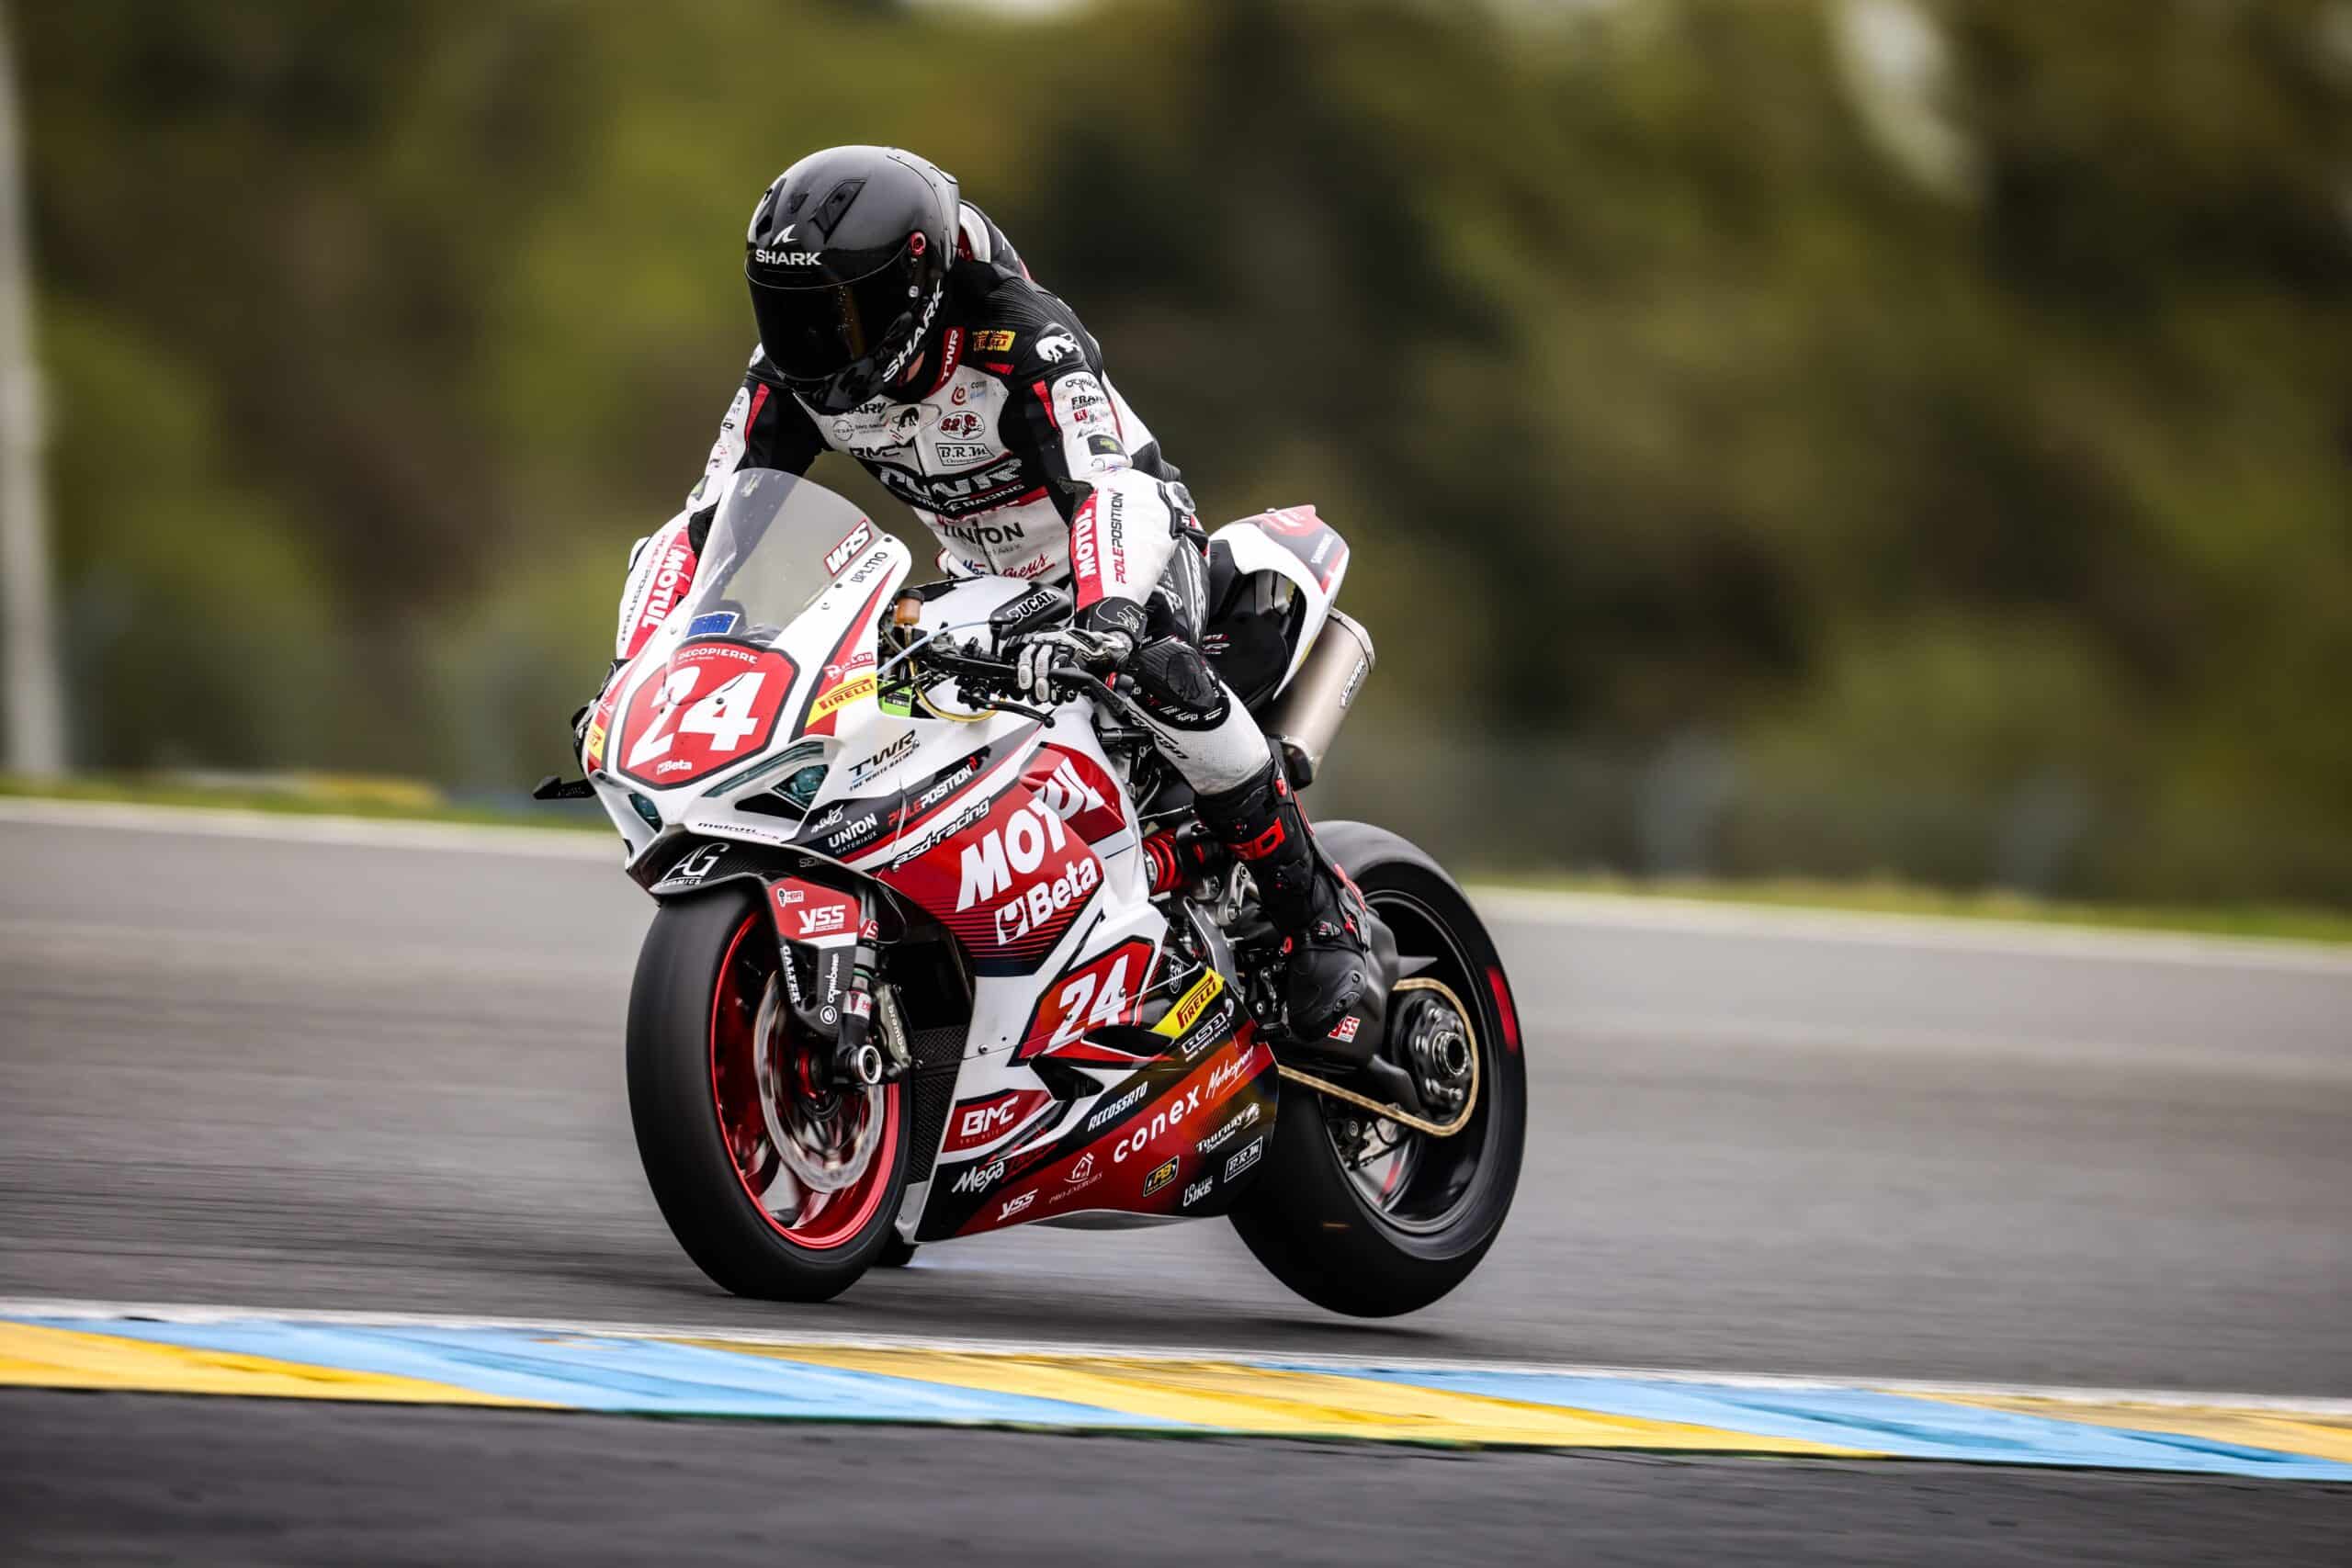 A bord de sa Ducati, Matthieu Gregorio tentera de faire forte impression pour le championnat de France de Superbike. © WJ/ William Voy